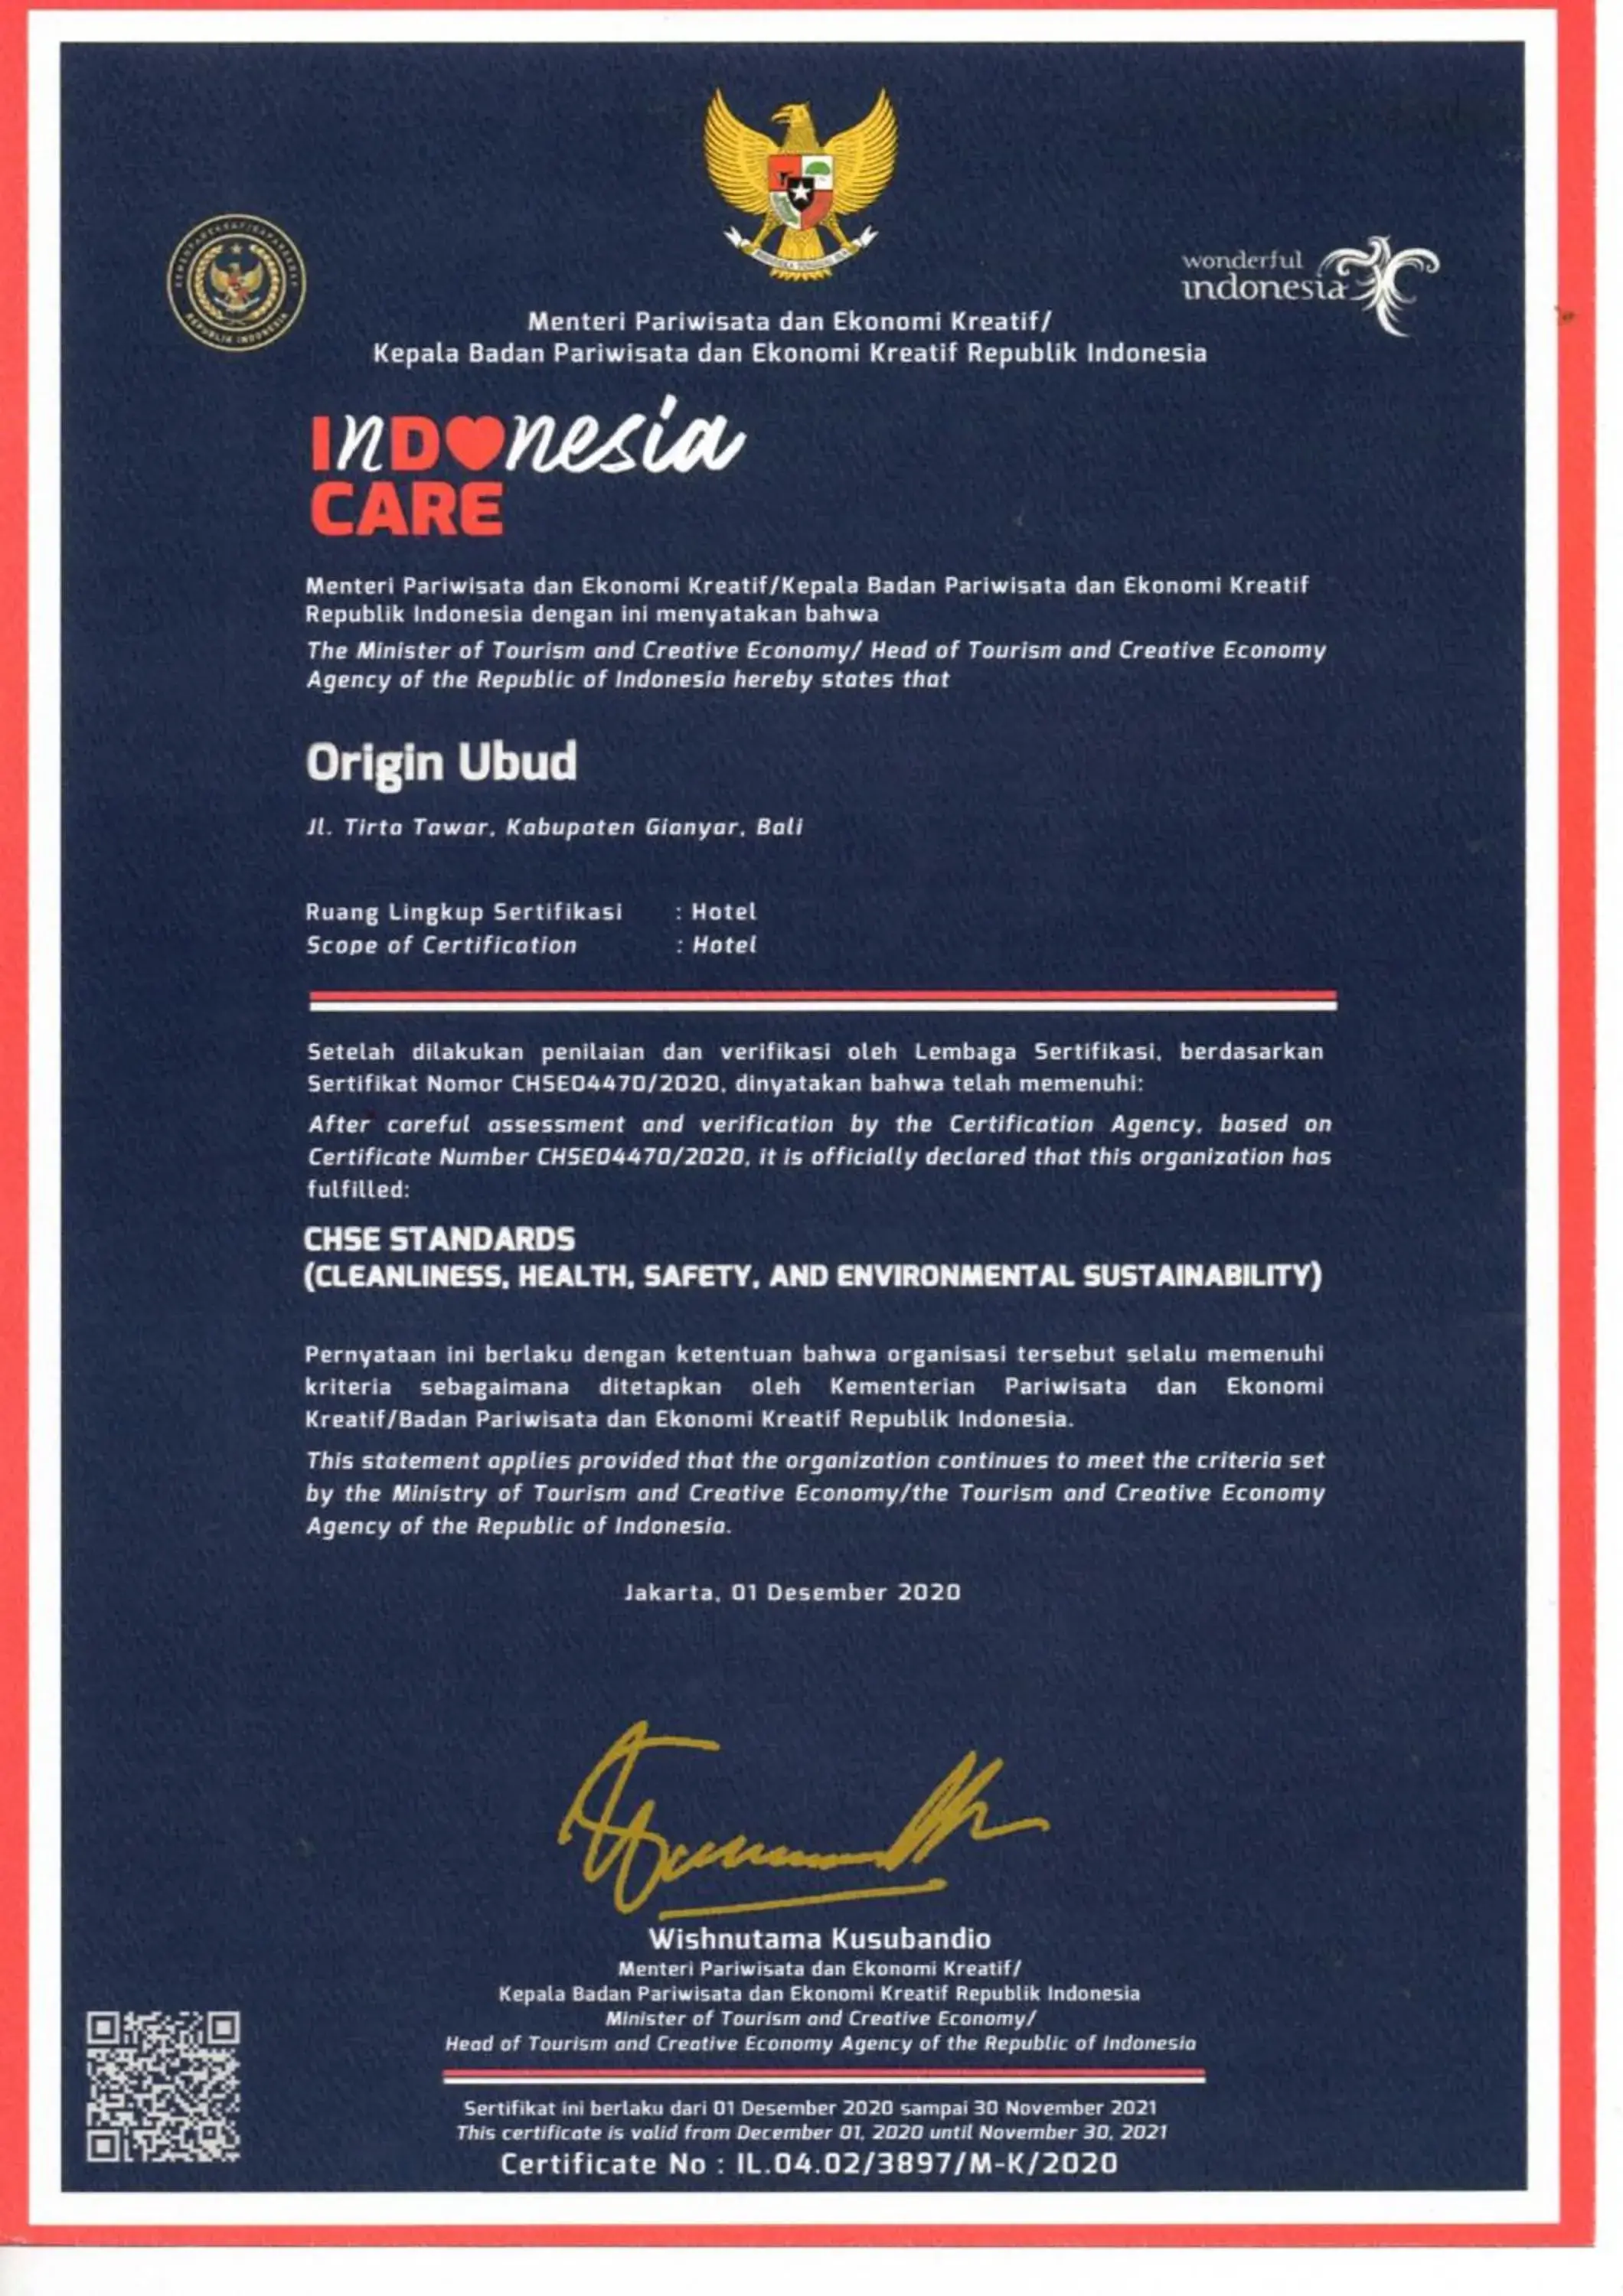 Certificate/Award in Origin Ubud